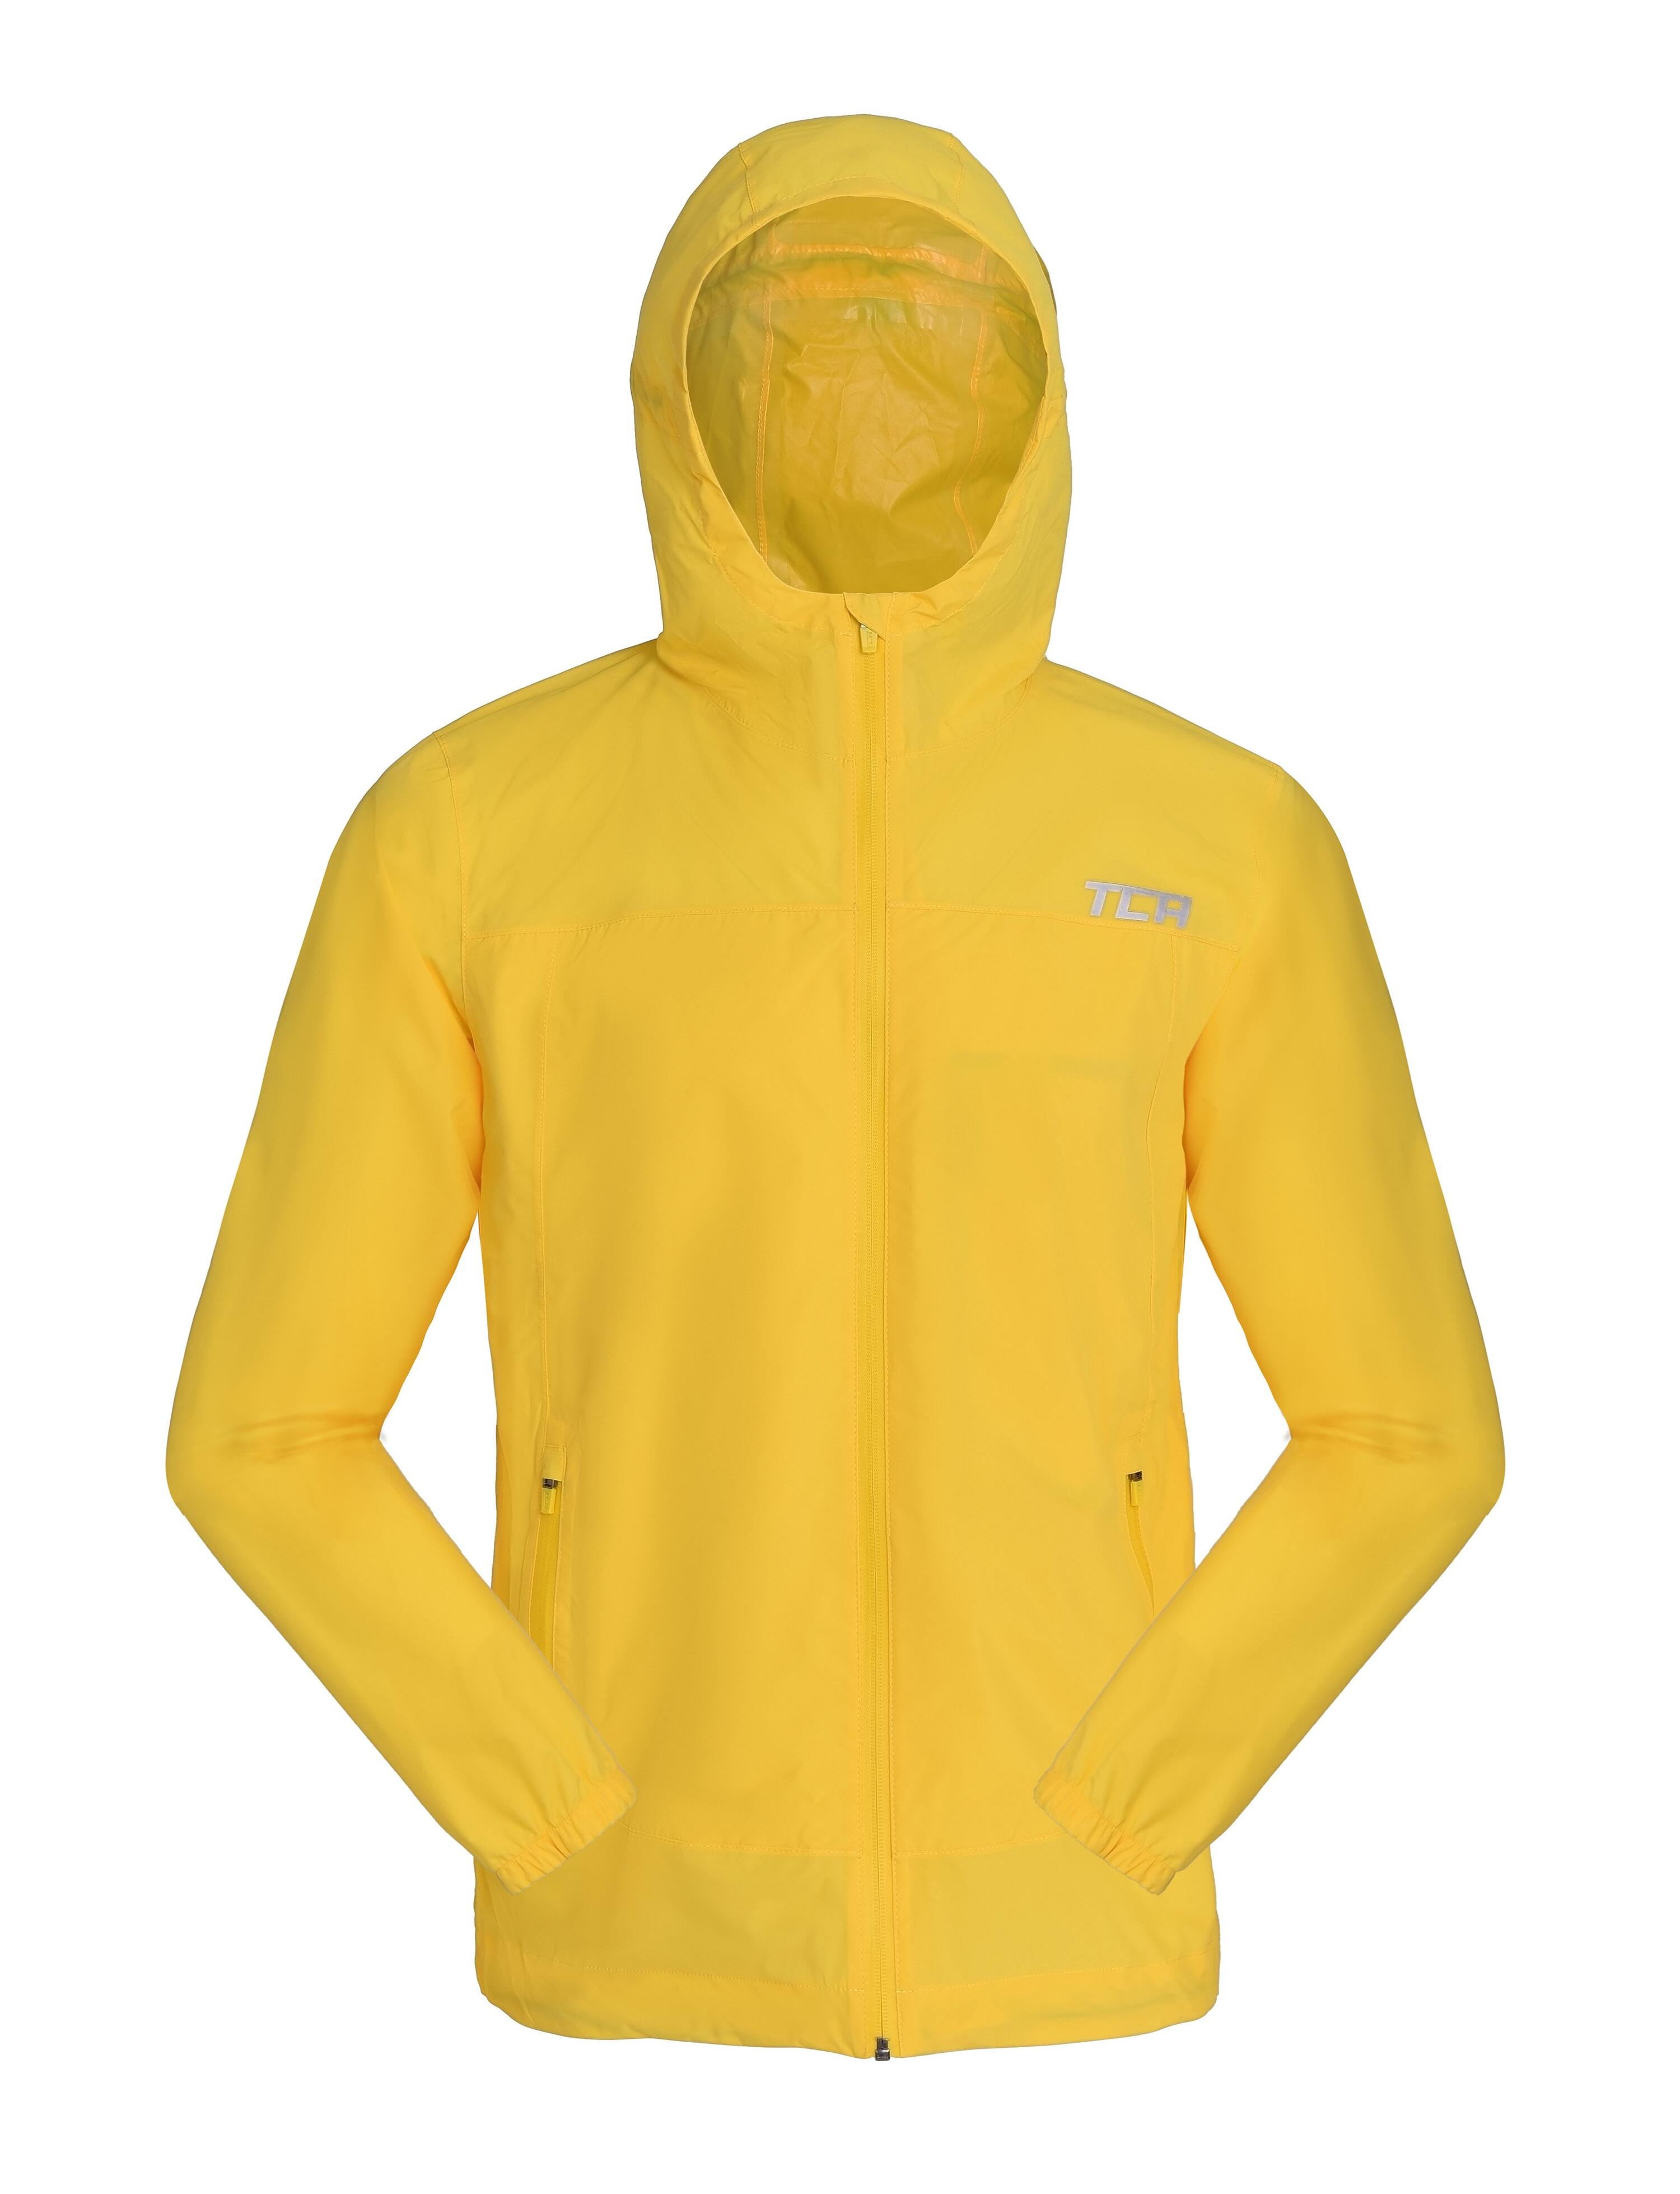 Boys' AirLite Rain Jacket with Zip Pockets - Vibrant Yellow 2/5